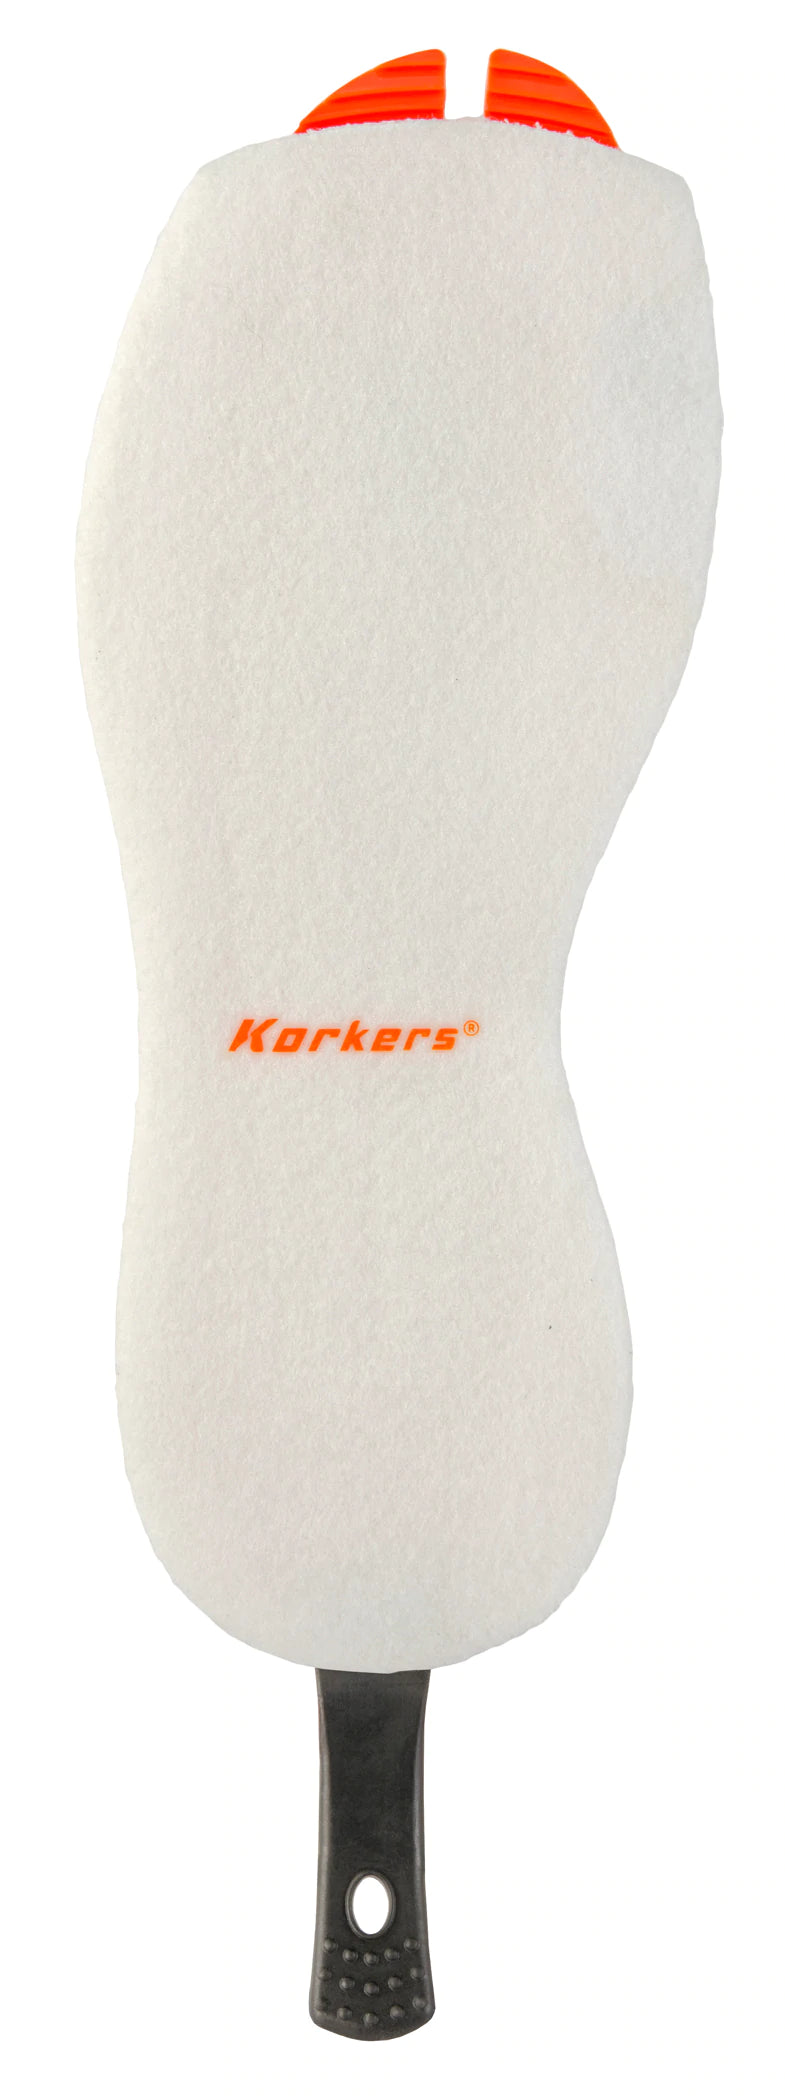 Korkers OmniTrax V3.0 Felt Fishing Shoe Sole, White/Orange